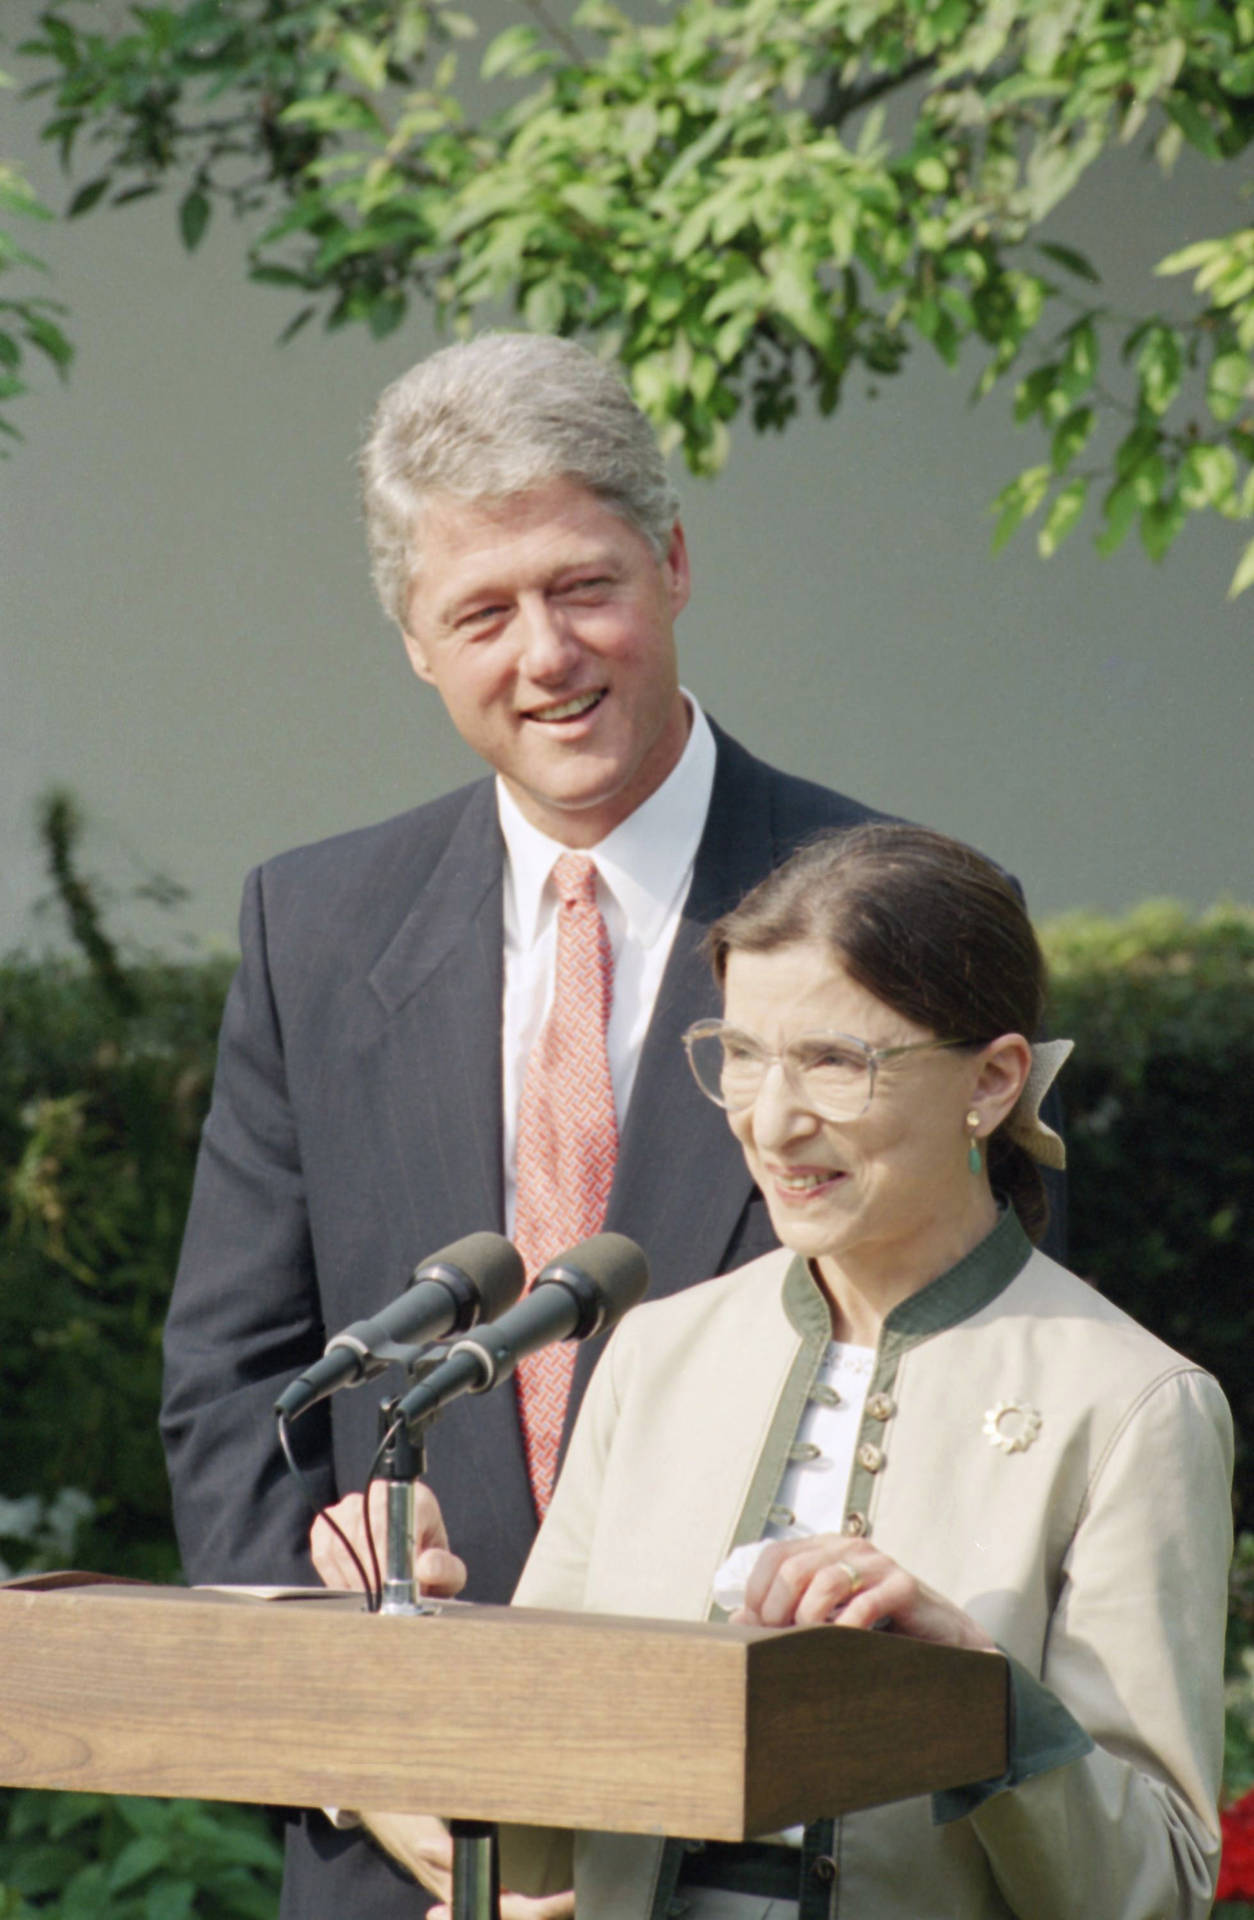 Ruth Bader Ginsburg And Bill Clinton Background